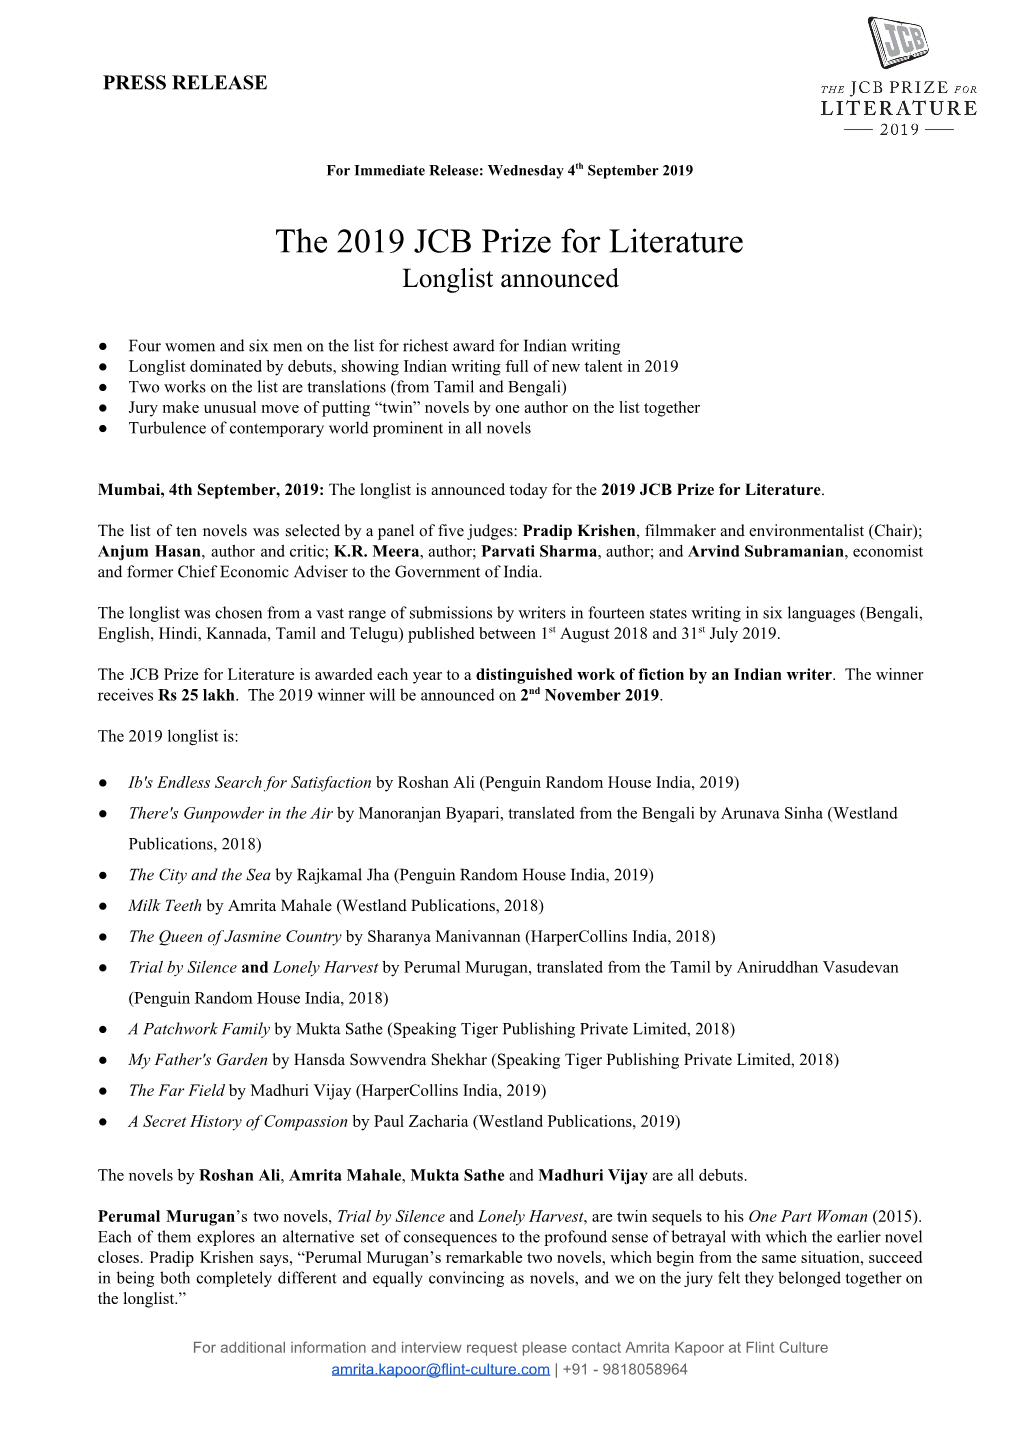 The 2019 JCB Prize for Literature Longlist Announced